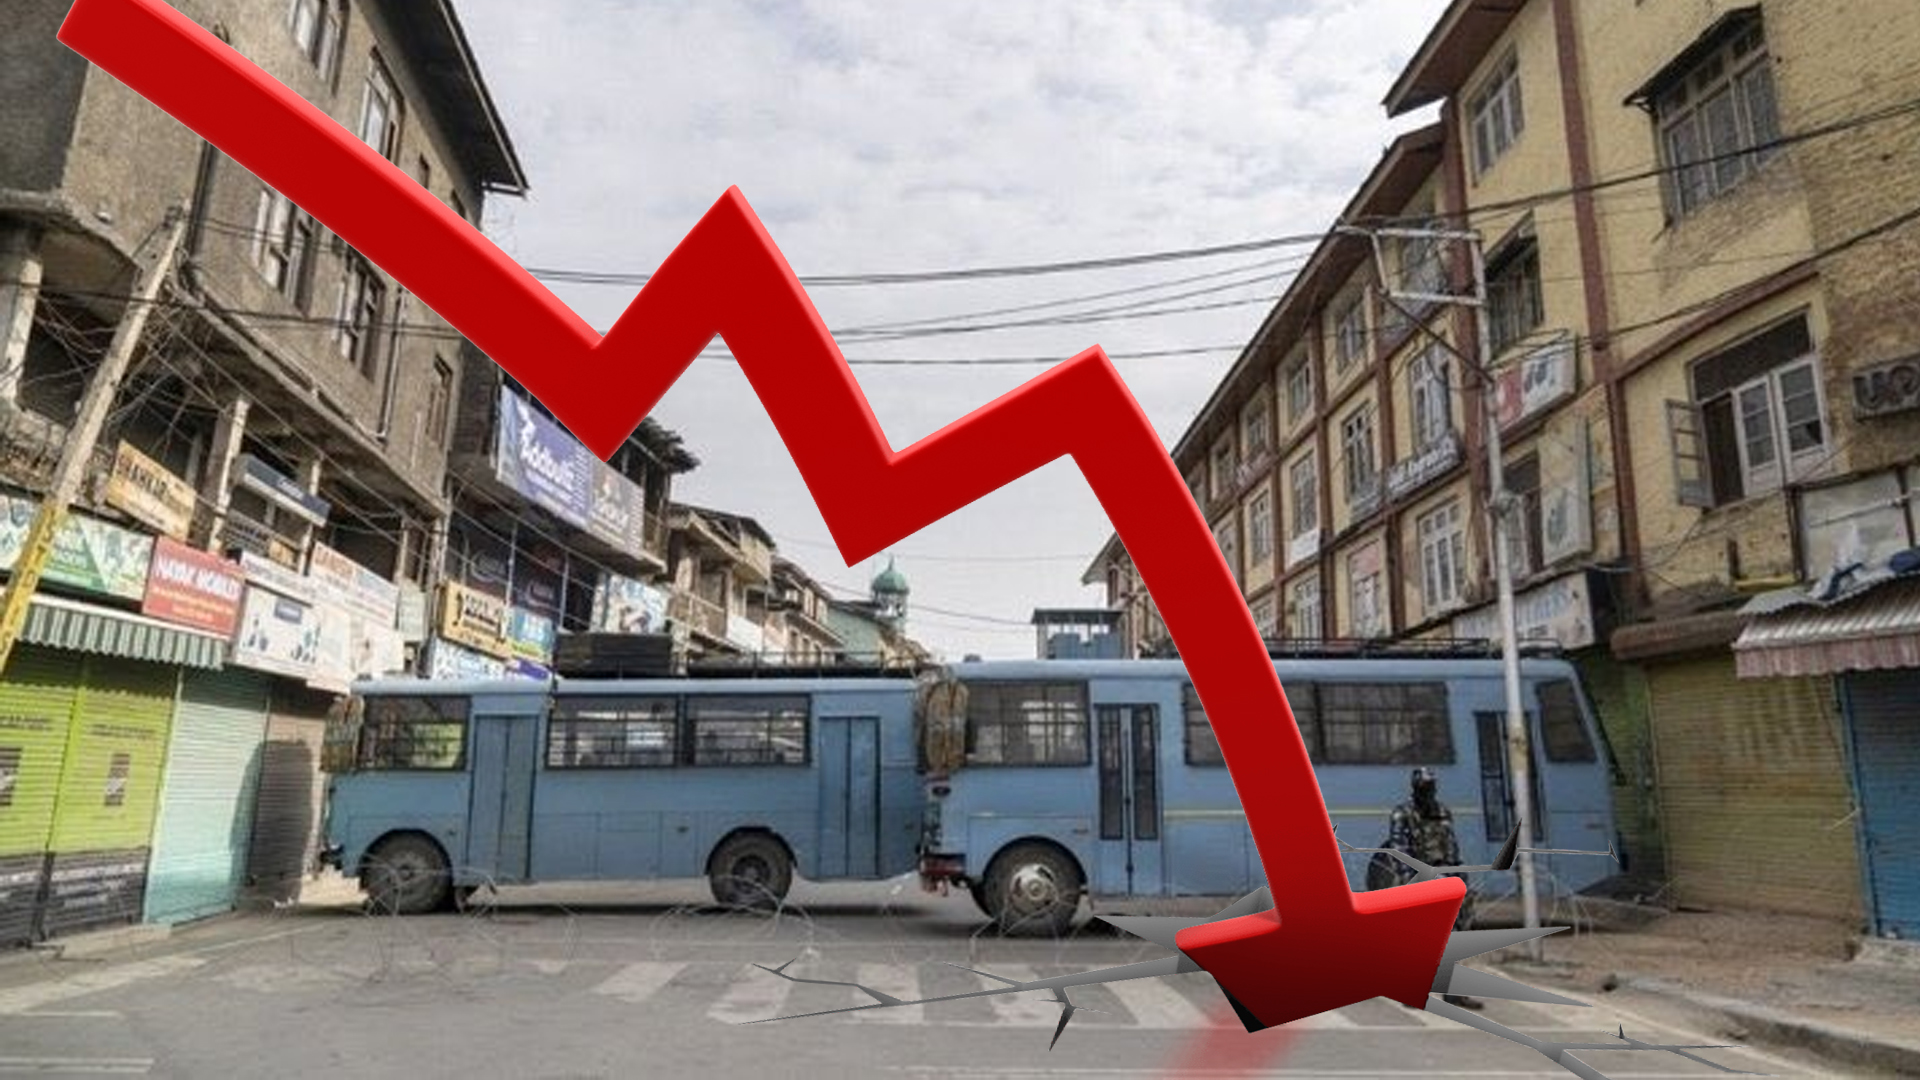 INDIAN ECONOMIC ACHIEVEMENTS CLAIM IN IIOJK – A PACK OF LIES | Kashmir Economy